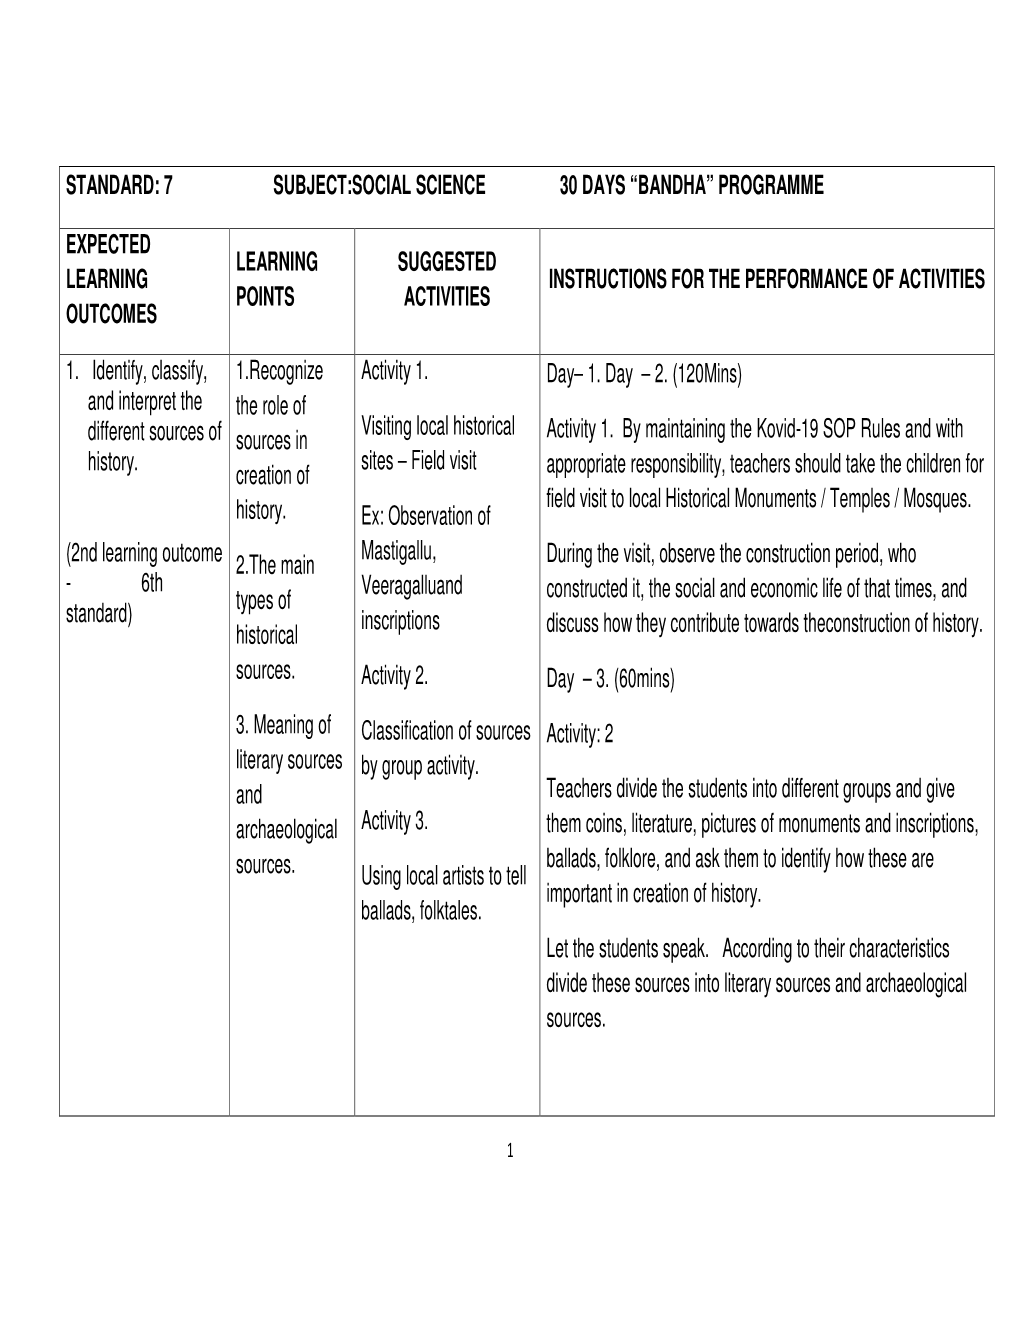 Standard: 7 Subject:Social Science 30 Days “Bandha” Programme